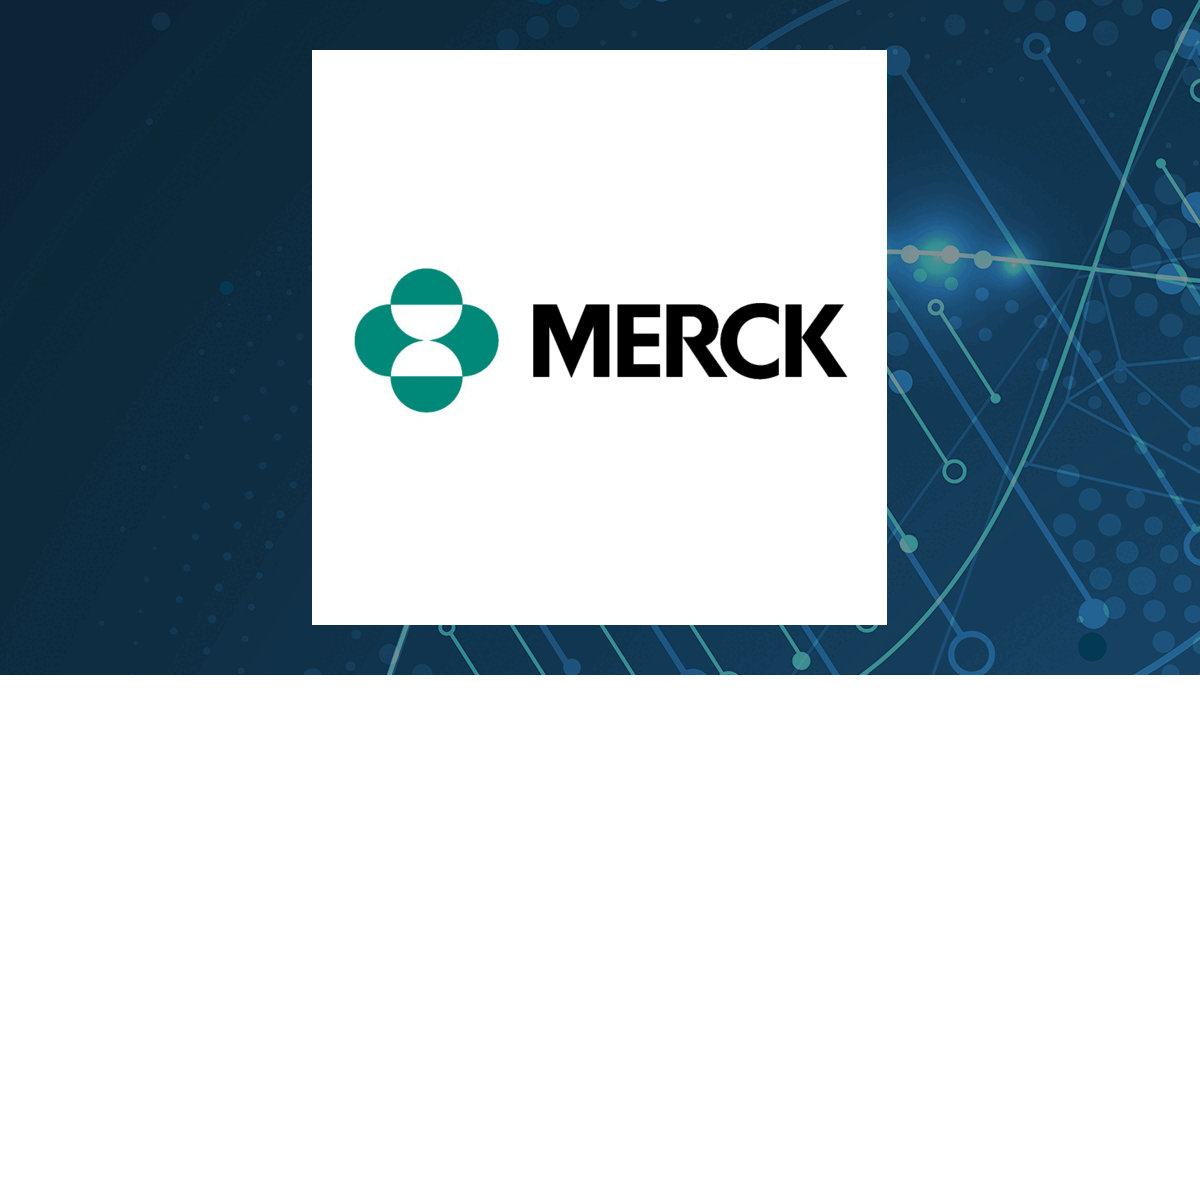 Merck & Co., Inc. logo with Medical background